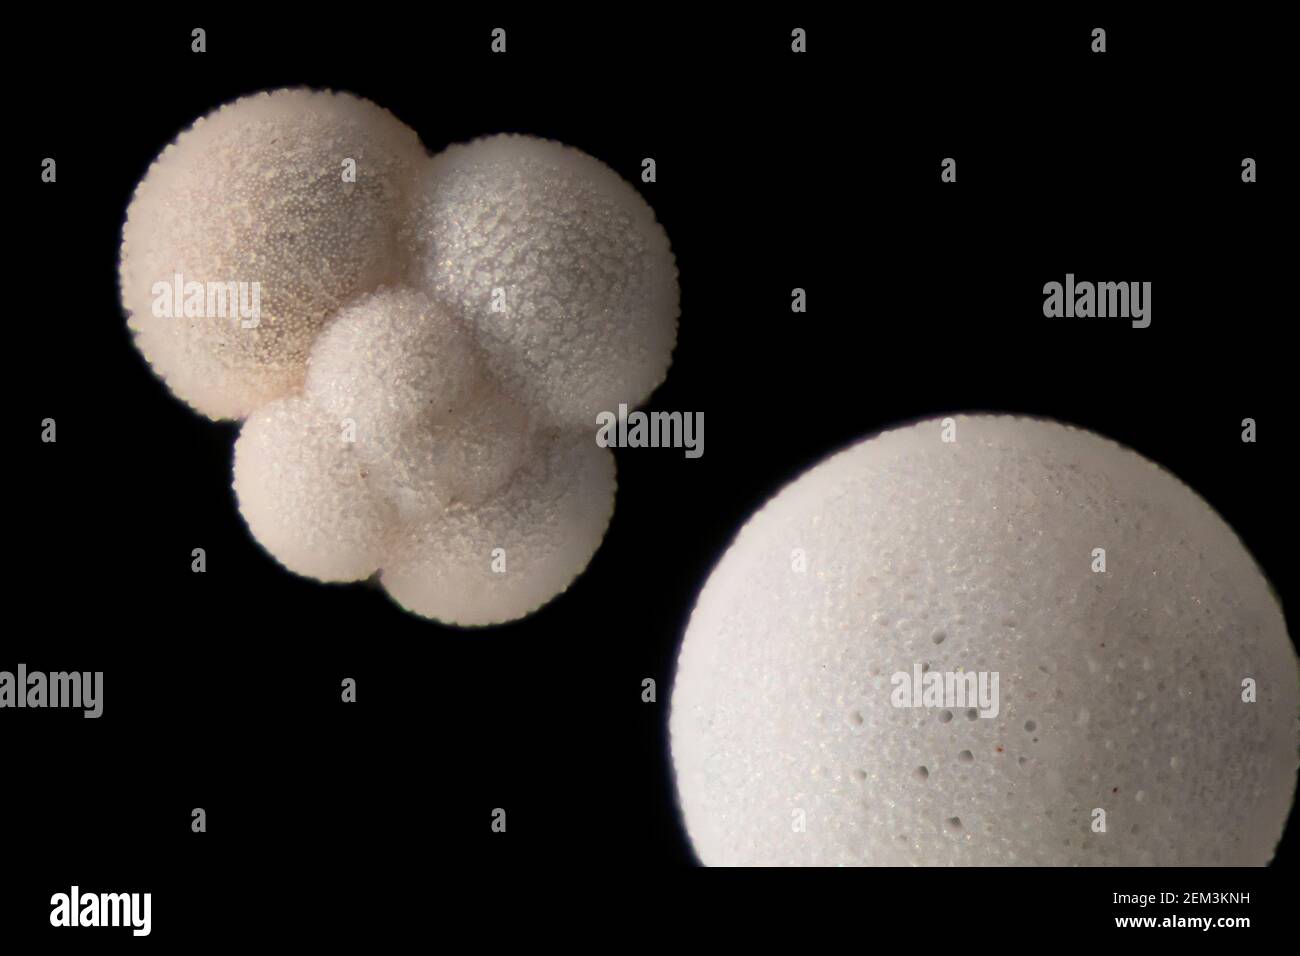 foraminiferans, forams (Foraminiferida), Recent planktonic foraminifera, dark field microscopic image, magnification x40 related to 35 mm Stock Photo